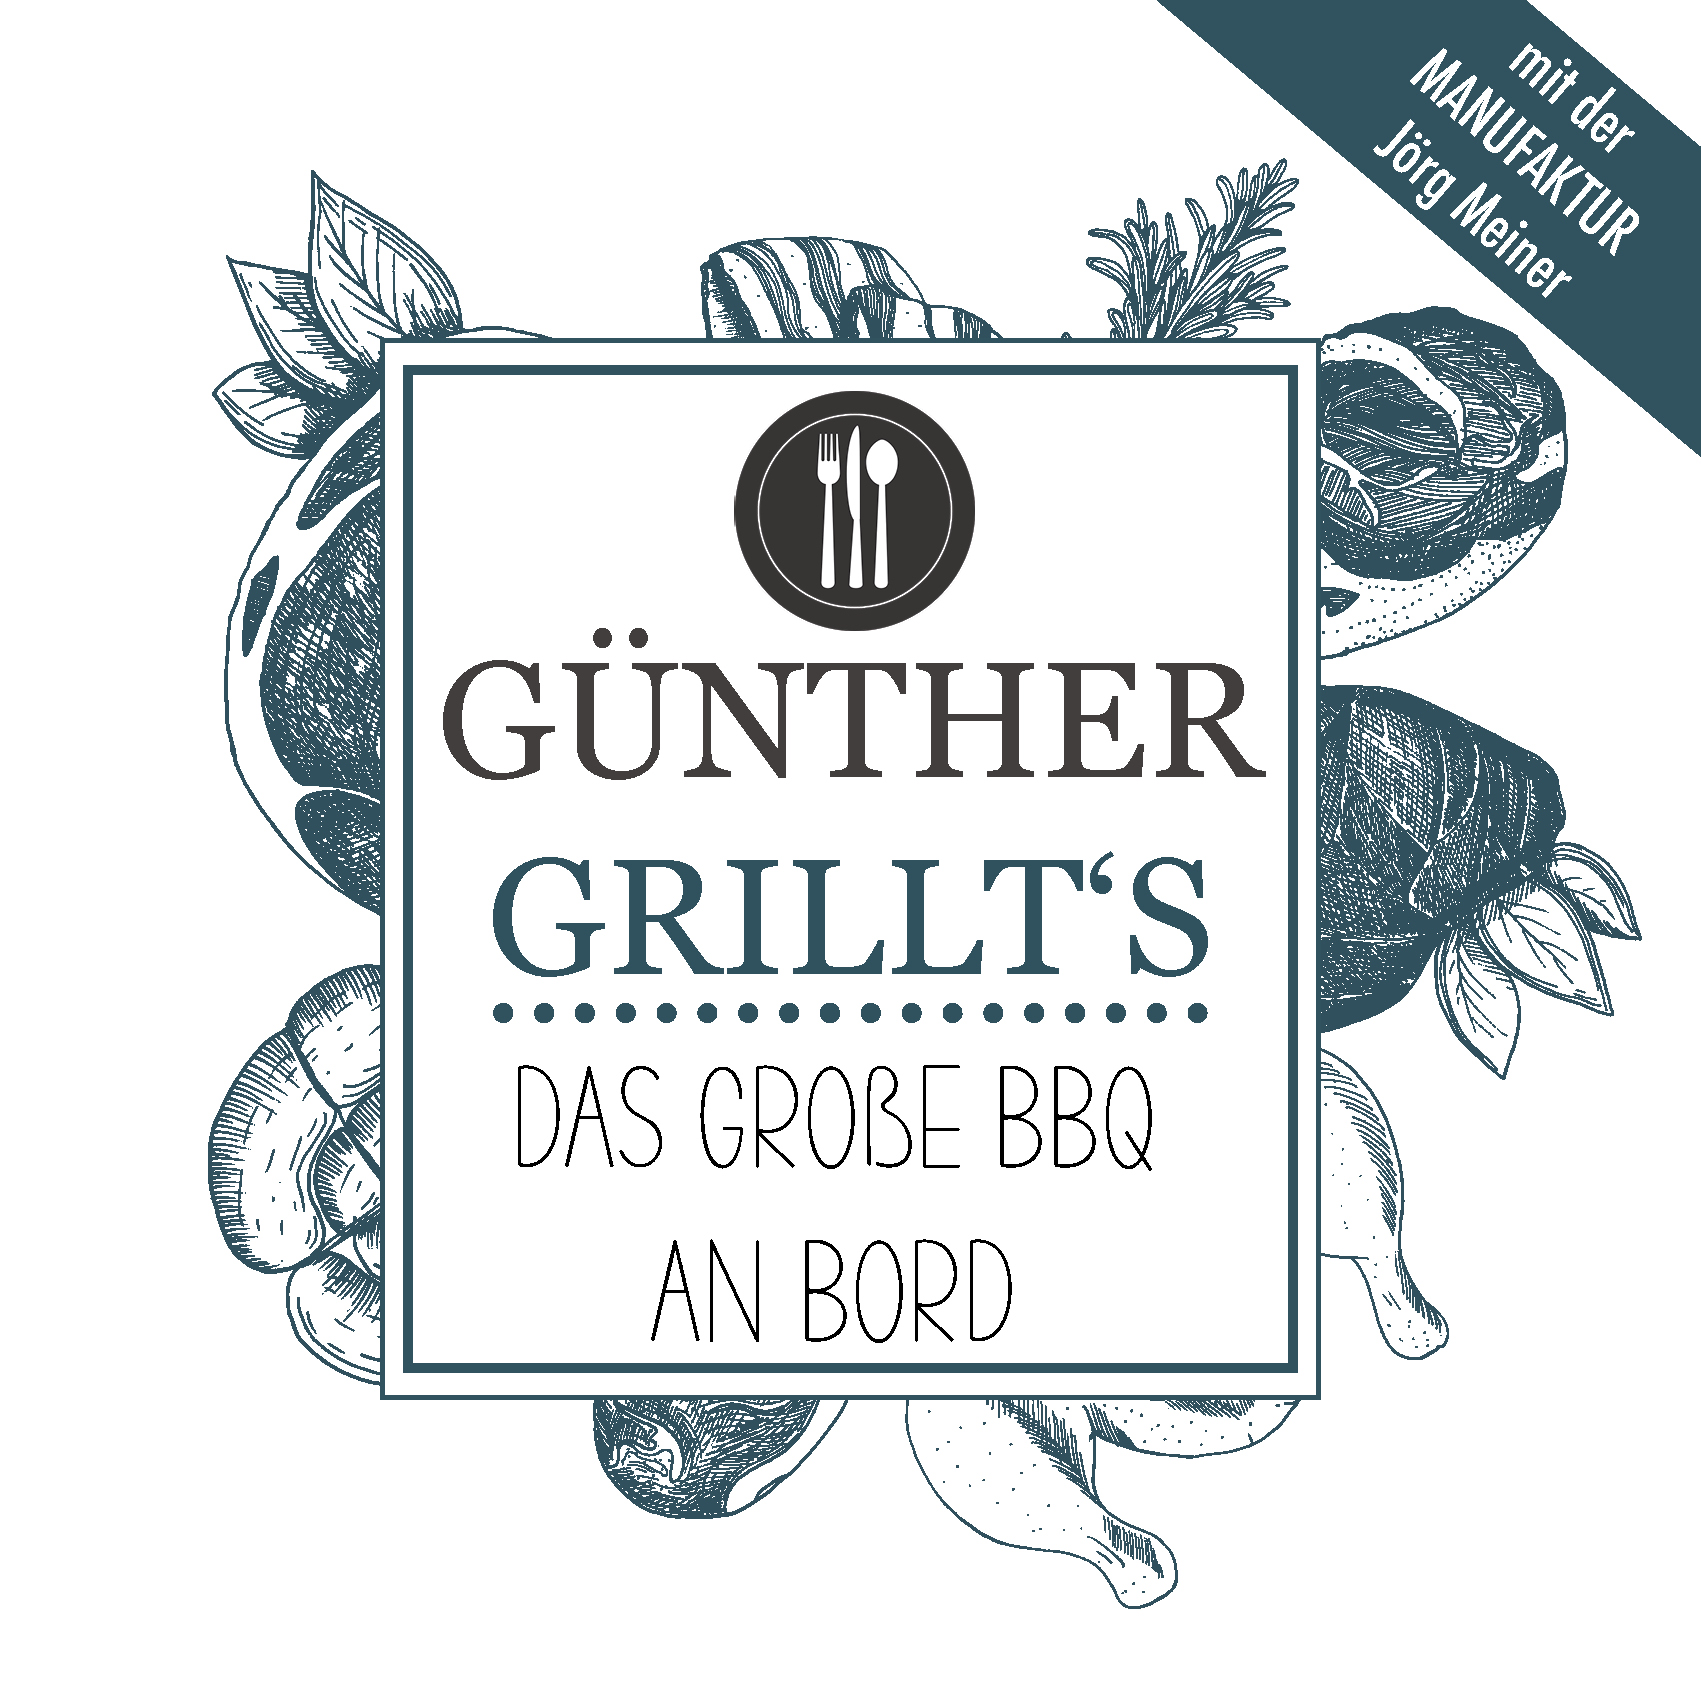 Ticket Günther grillts